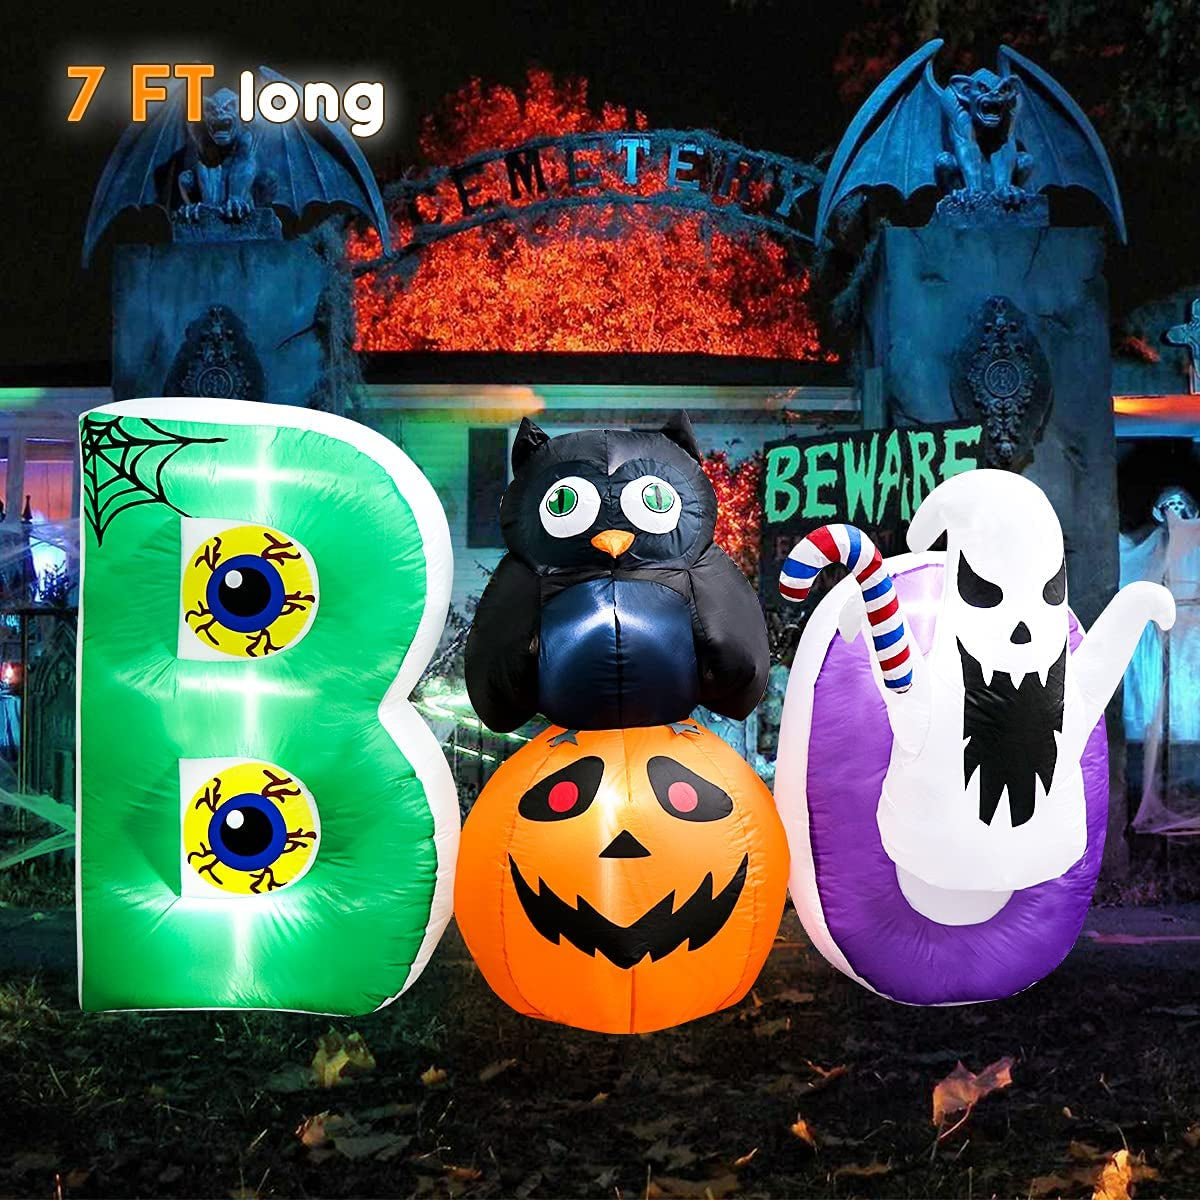 Meland, Meland Halloween Boo Scene Inflatable with Owl, Pumpkin and Ghost 7Ft - Blow up Halloween Decorations for Indoor Outdoor Yard Garden (Boo)